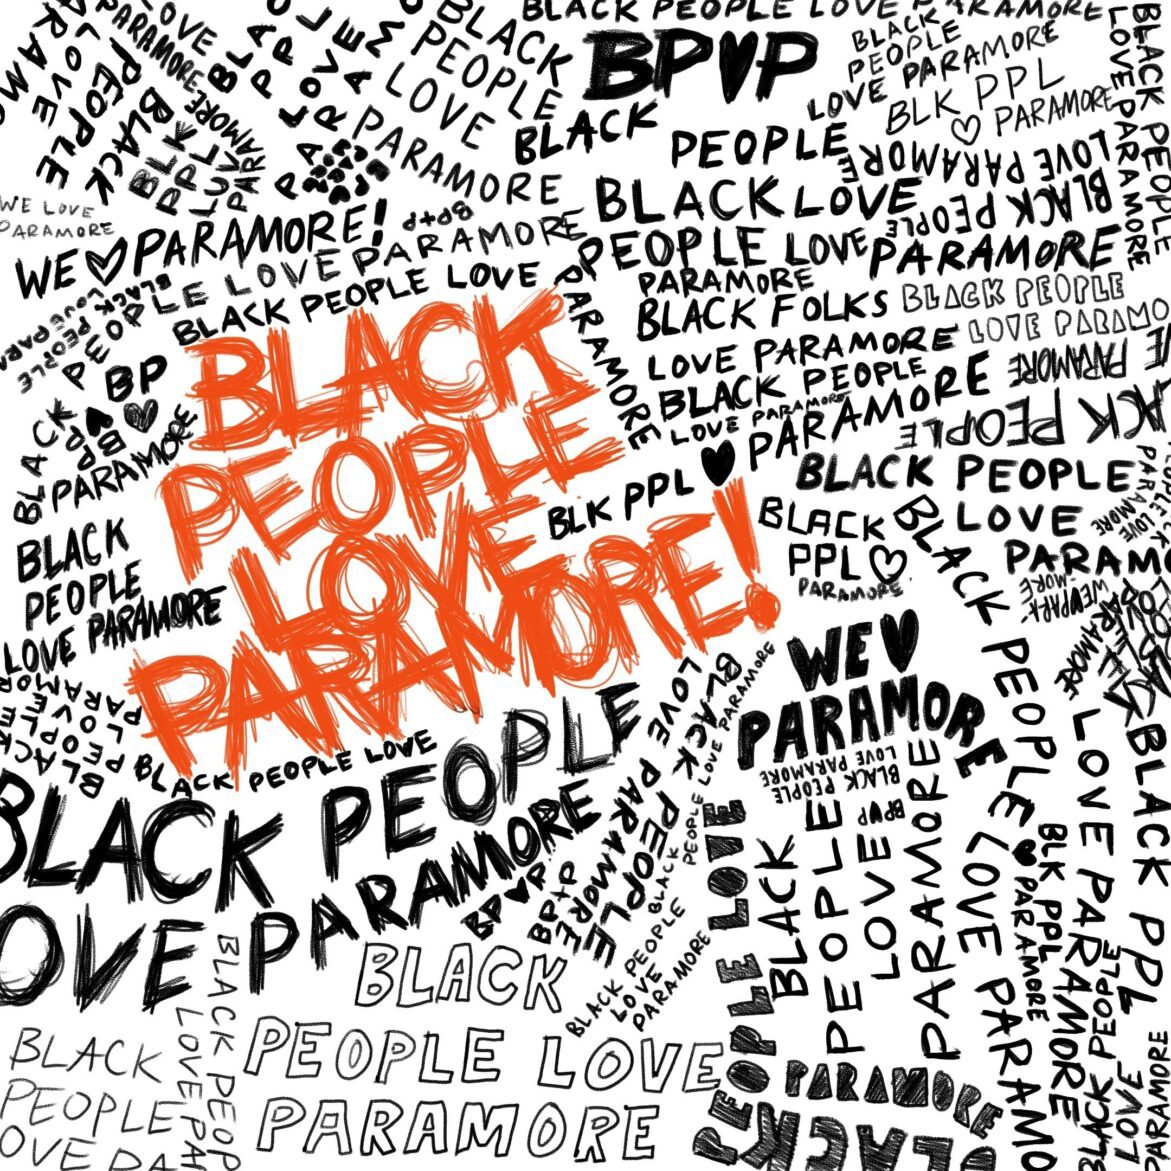 Black Podcasting - Black People Love Hookah ft. Toya Coleman